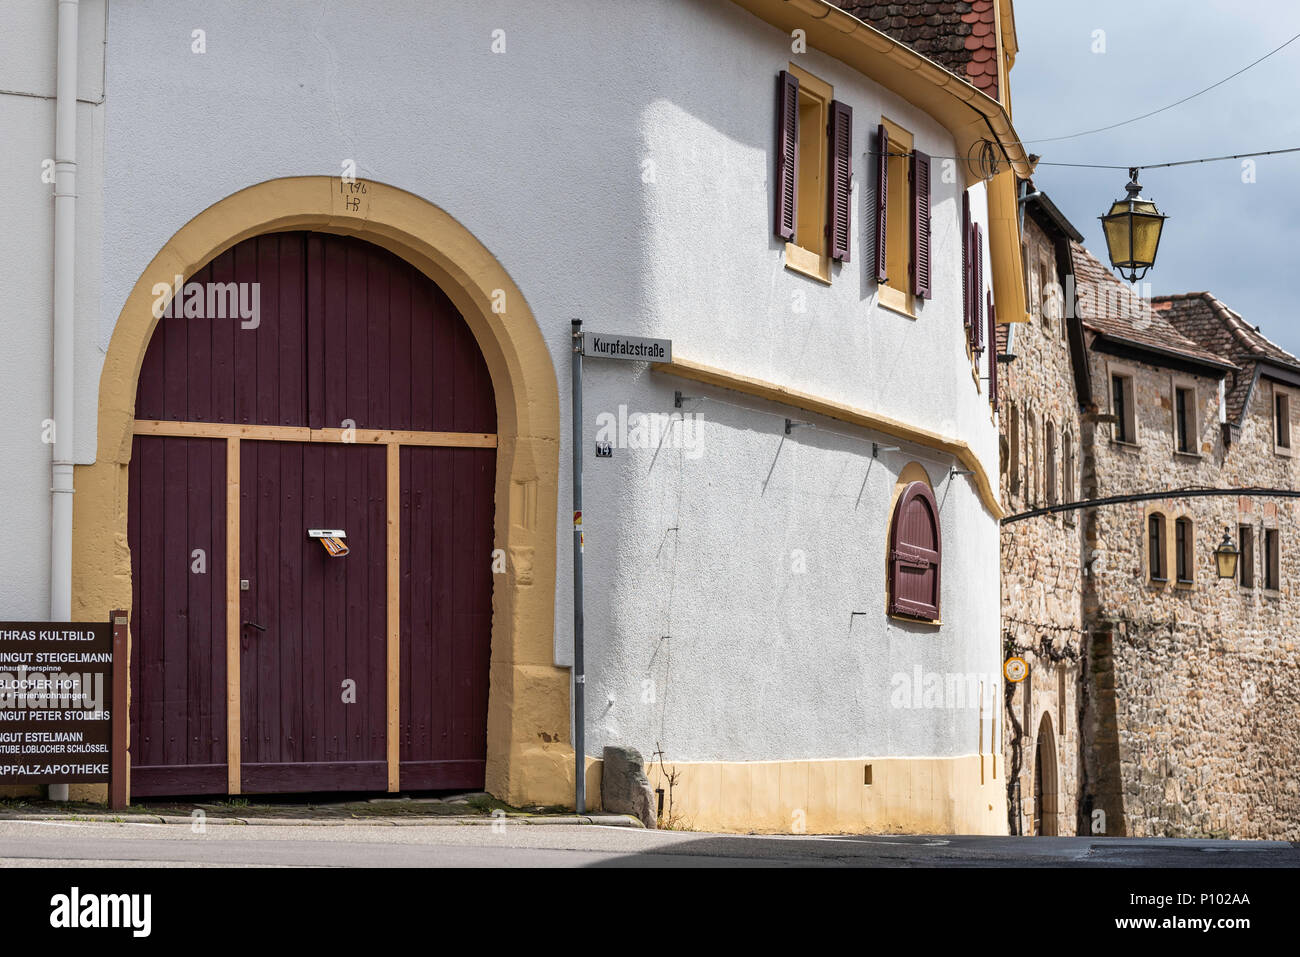 Palatinate village, Gimmeldingen, Germany Stock Photo